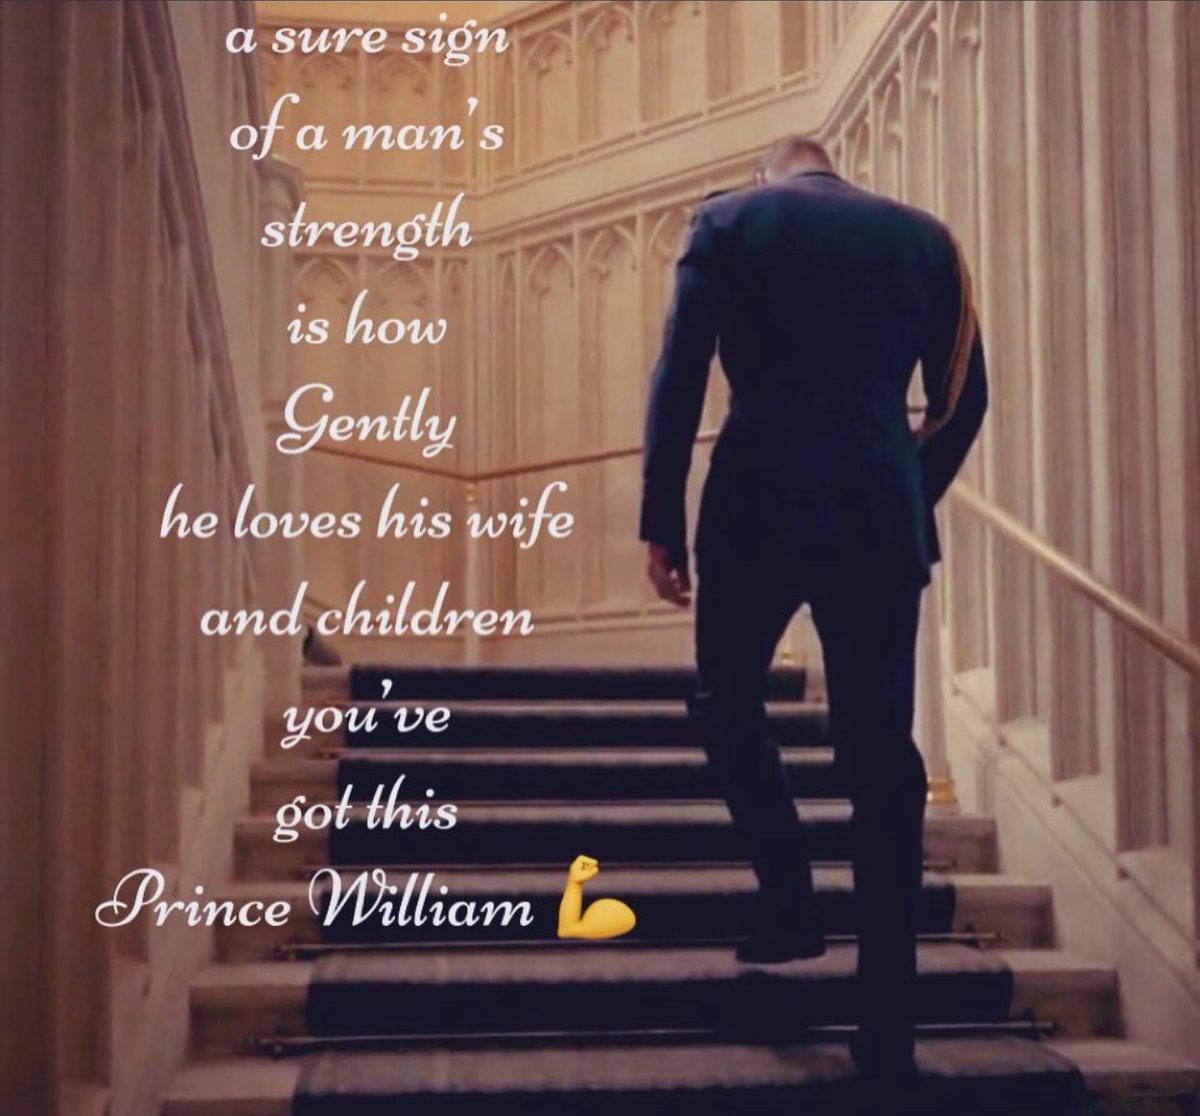 #PrinceWilliam ❤️
#PrinceofWales ❤️